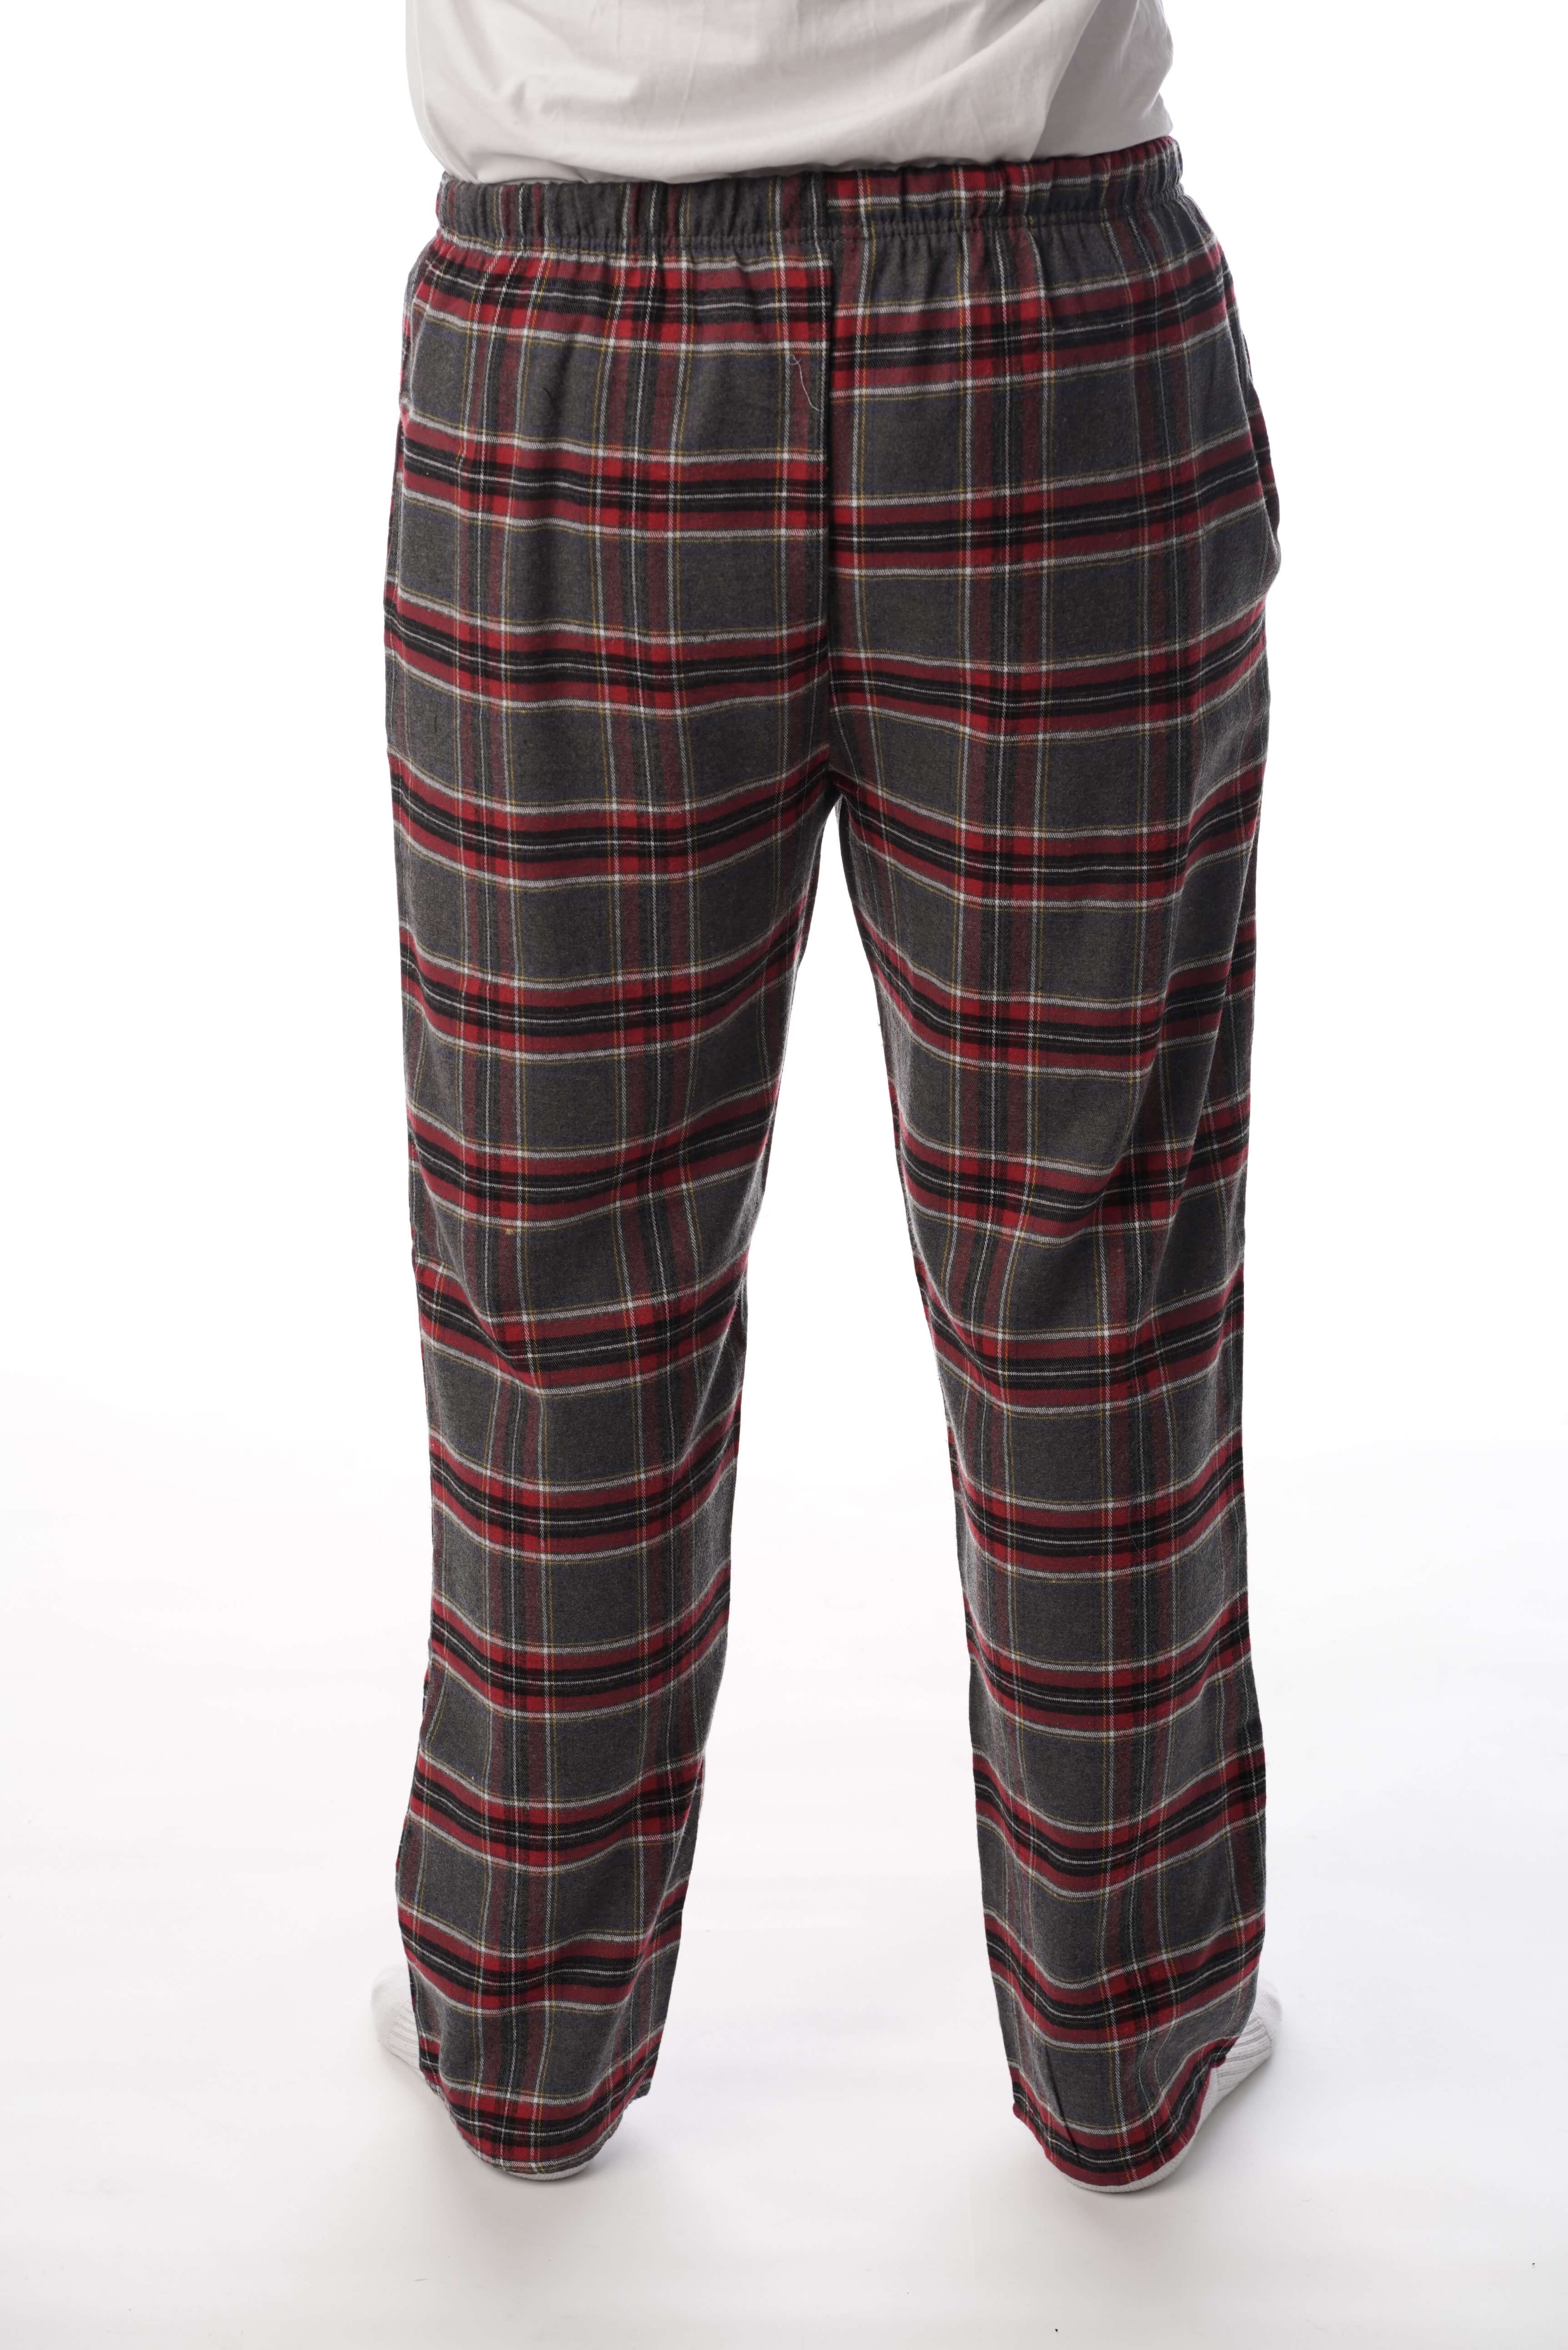 NWT PENDLETON XL Pajama Pants Beige Plaid Bottoms Pajamas Men's | eBay